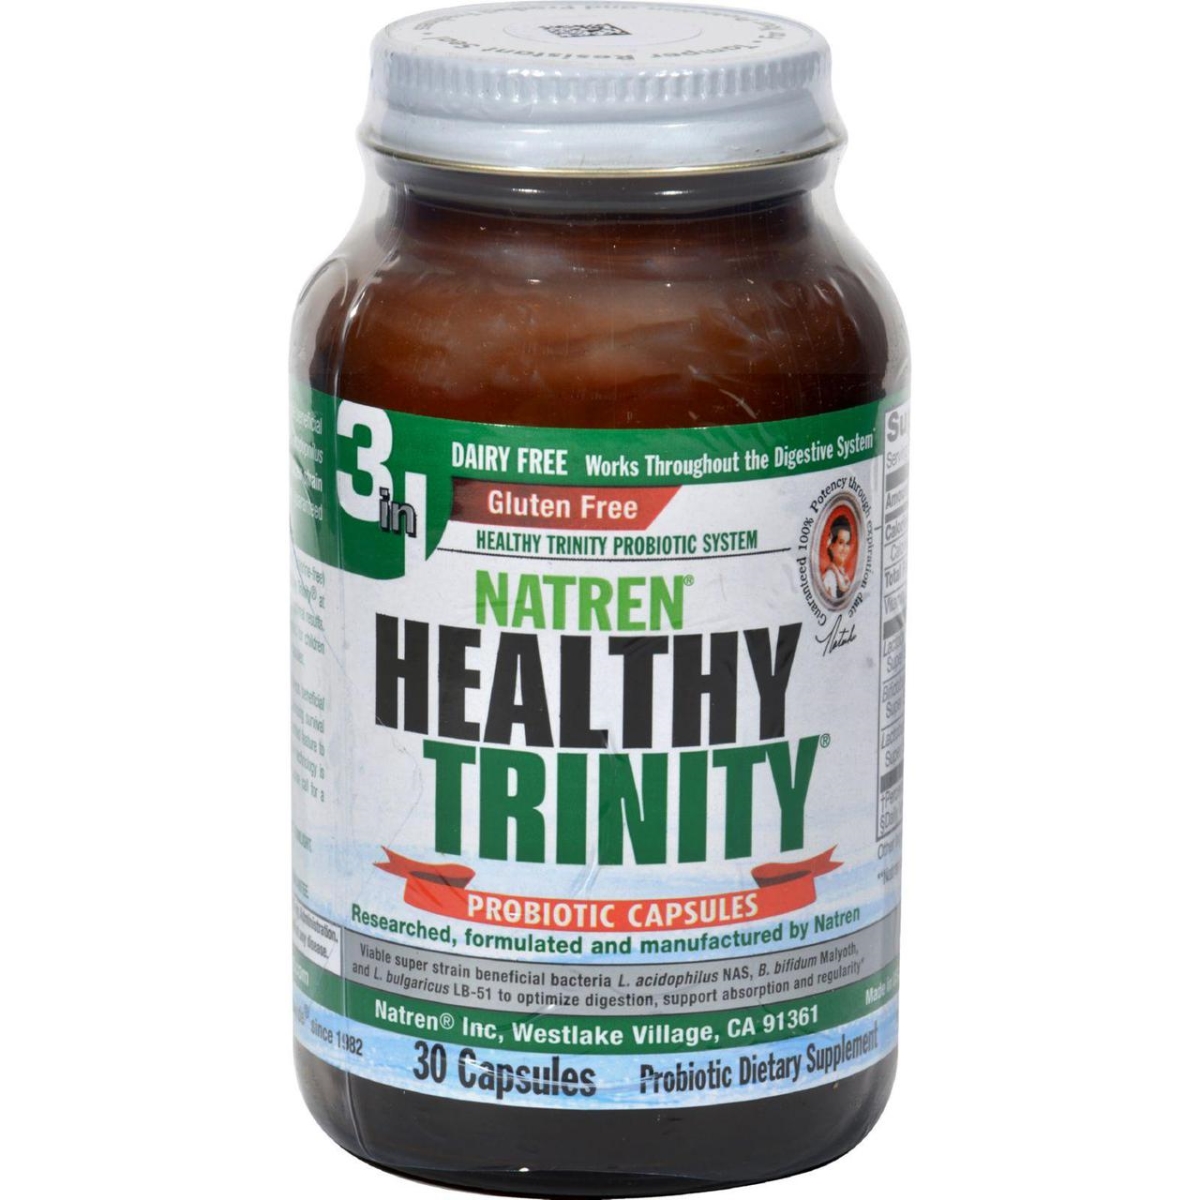 Hg0454629 Healthy Trinity Dairy Free - 30 Capsules